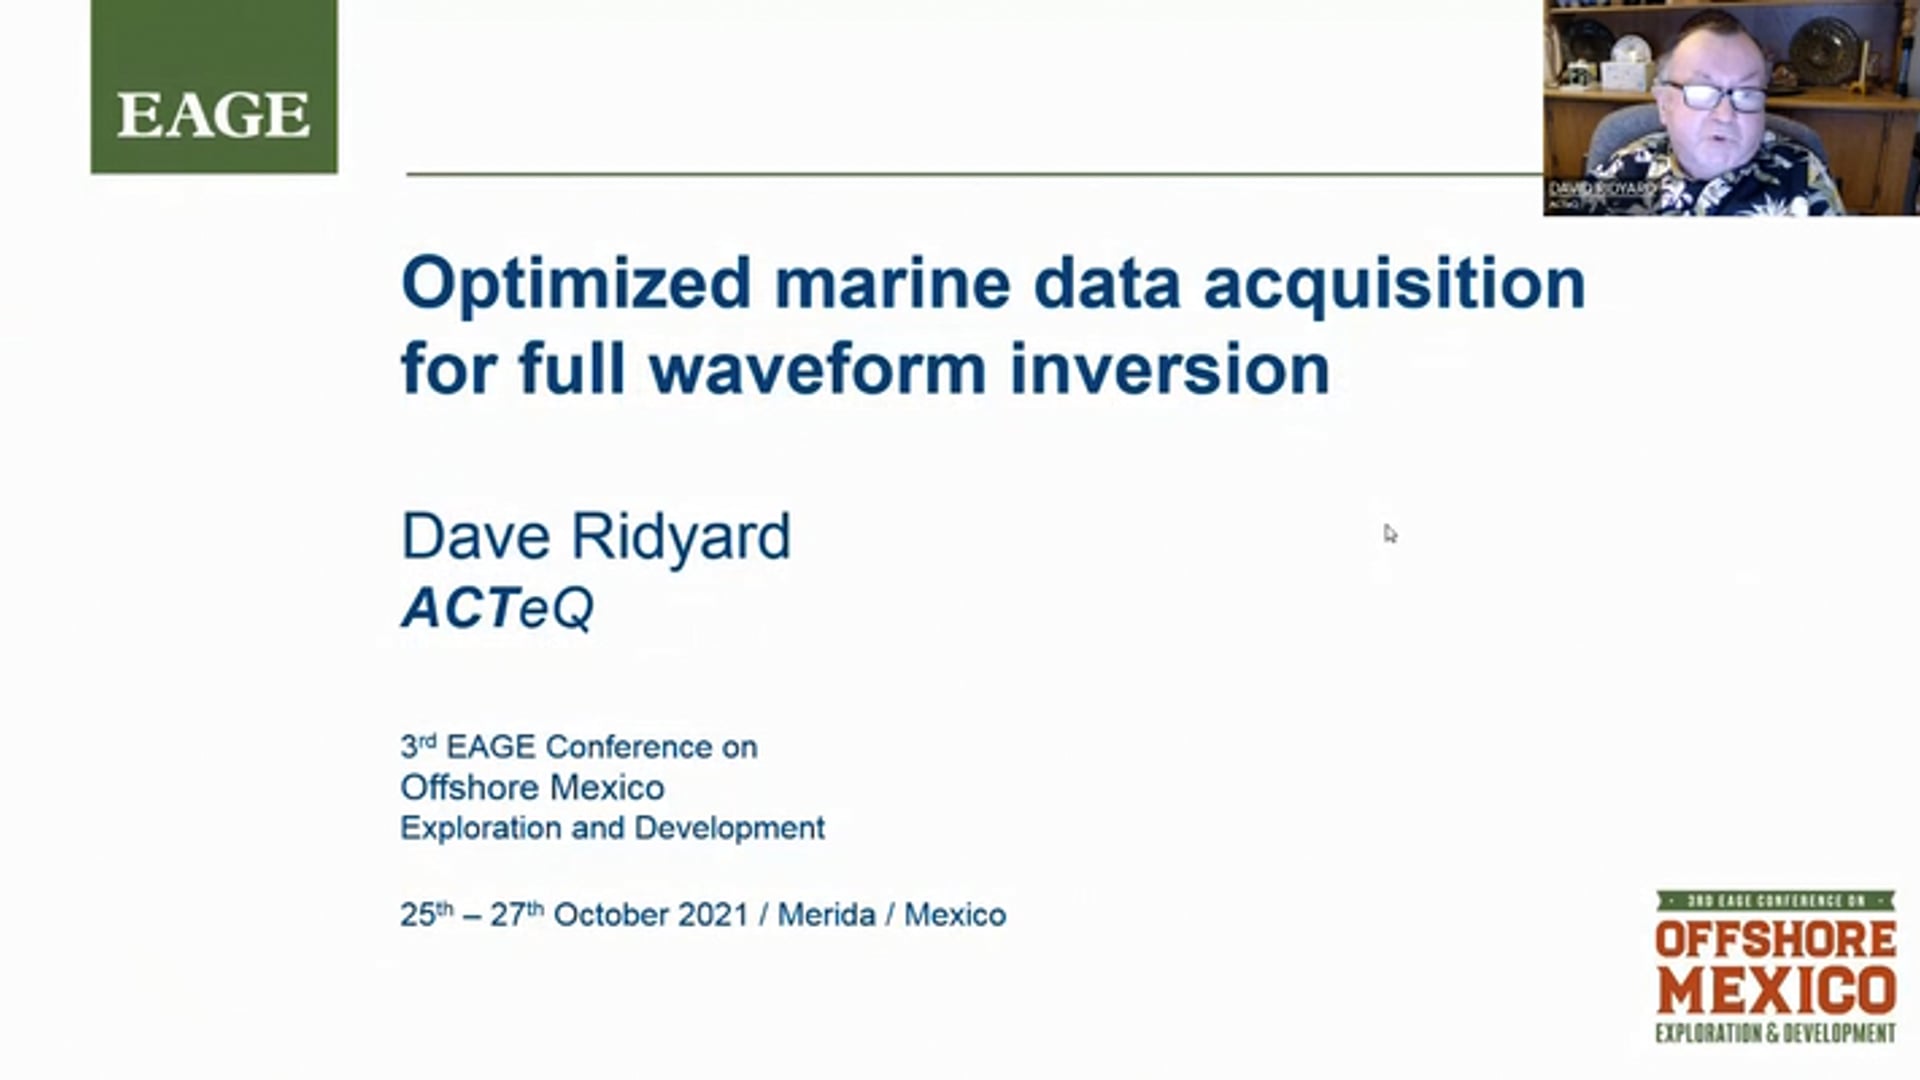 Optimization of marine seismic data acquisition for full waveform inversion